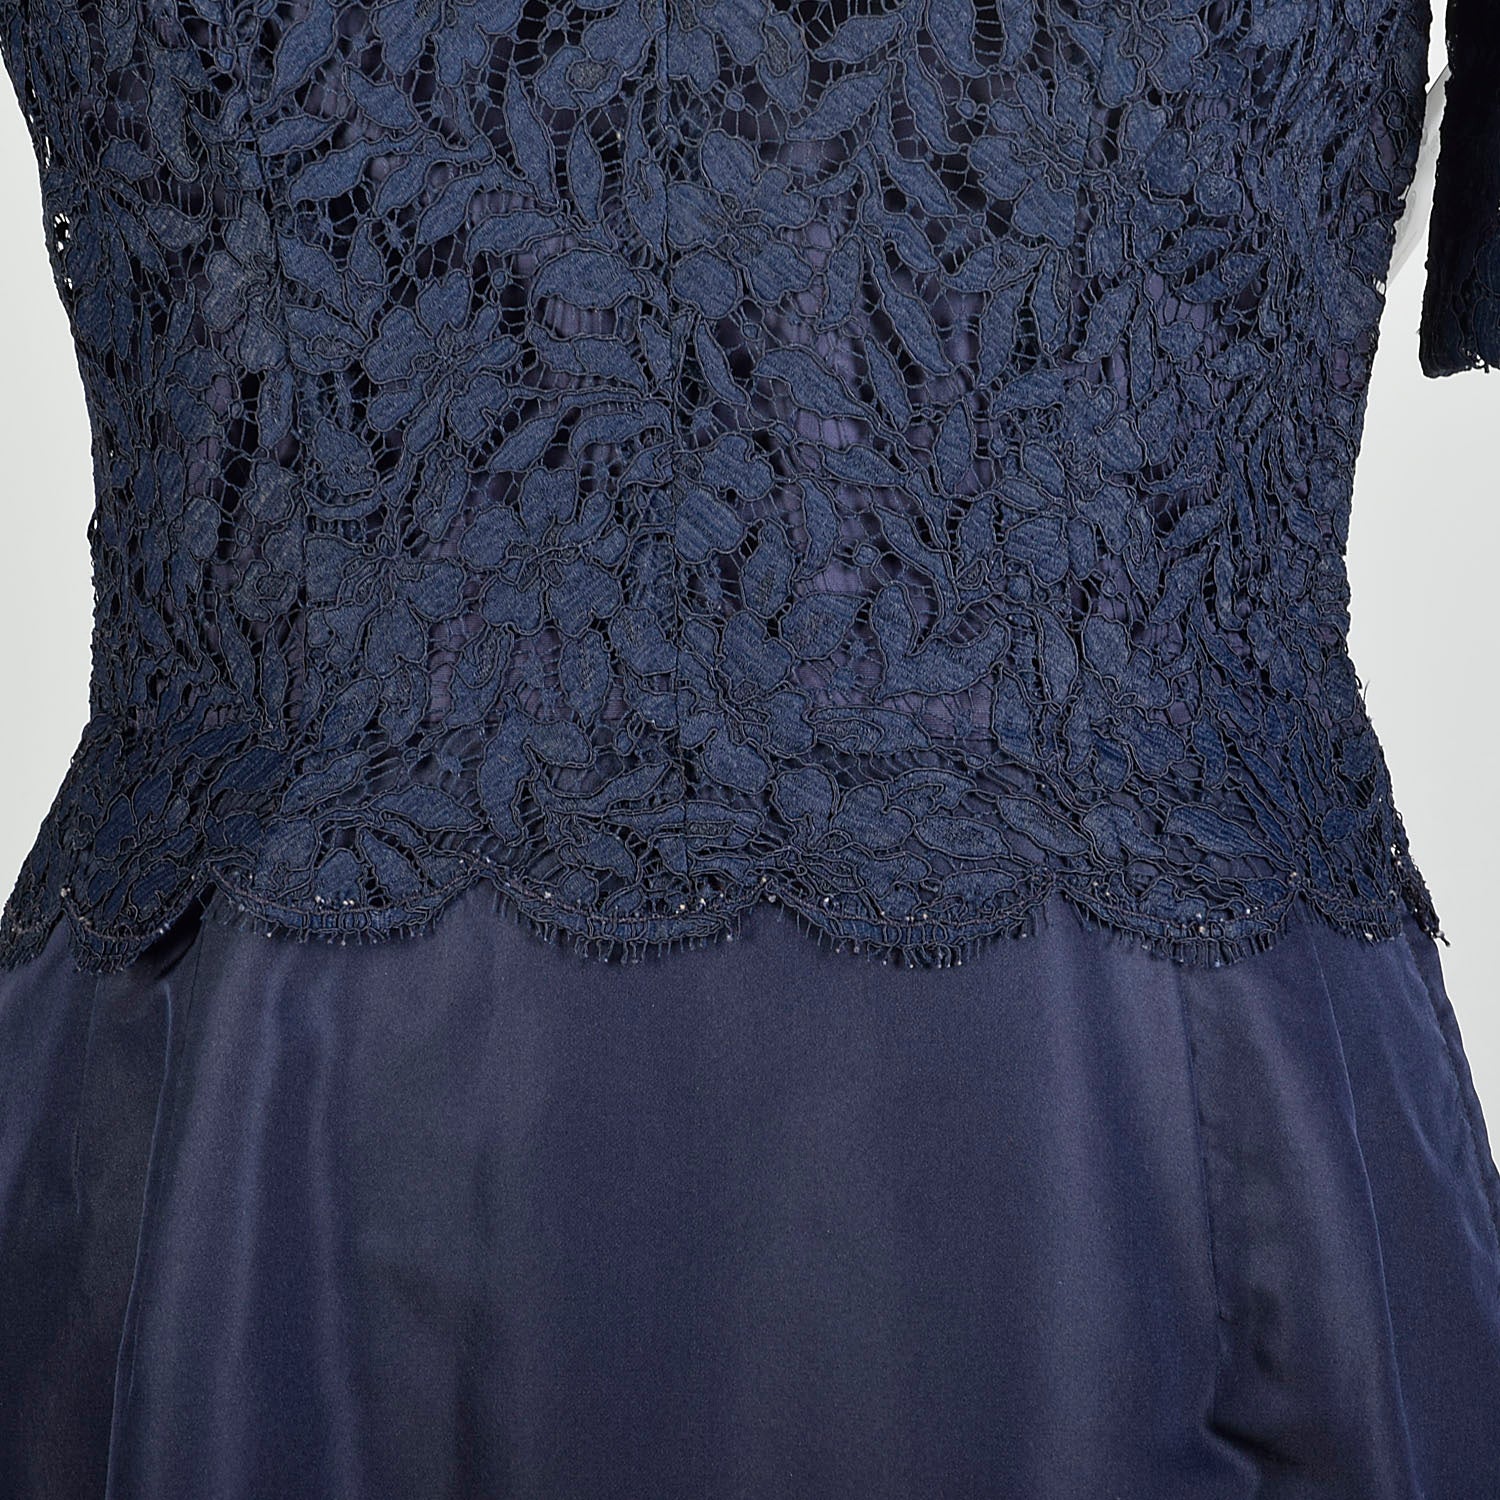 Large 1950s Navy Blue Cocktail Dress Illusion Neckline Lace Taffeta Evening Dress